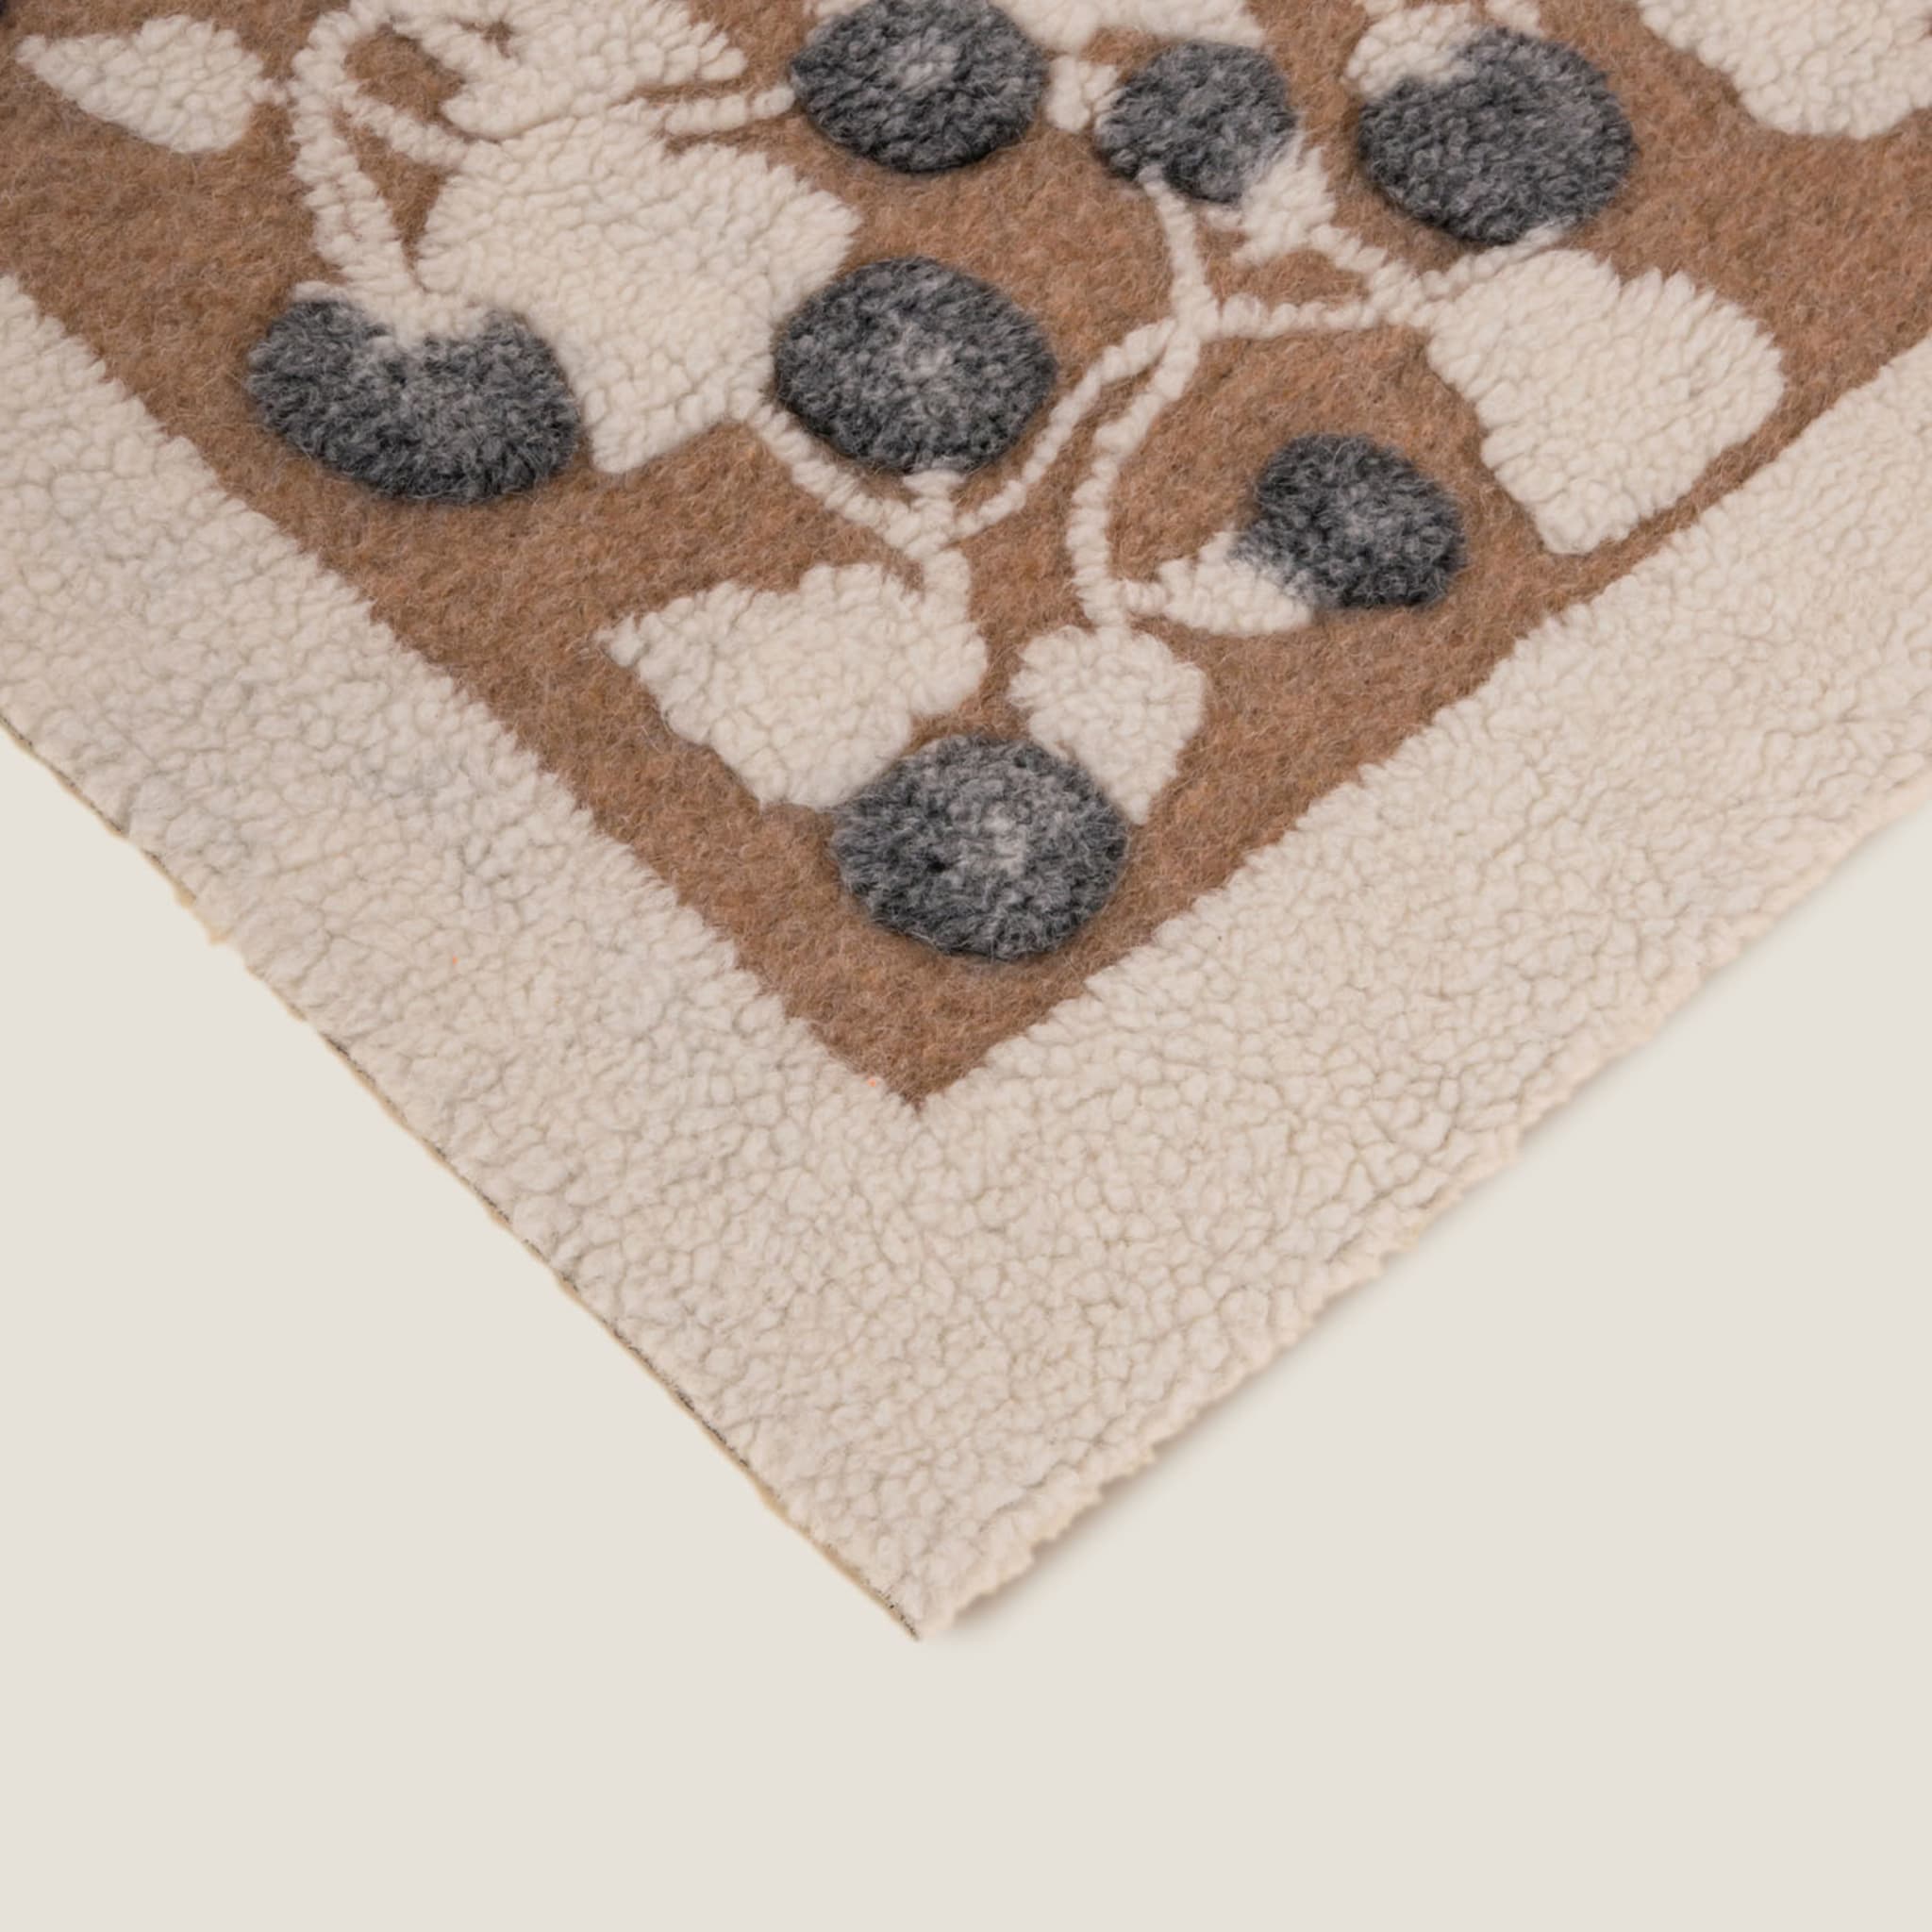 Armonia Grey Alpaca Wool Blanket - Alternative view 1